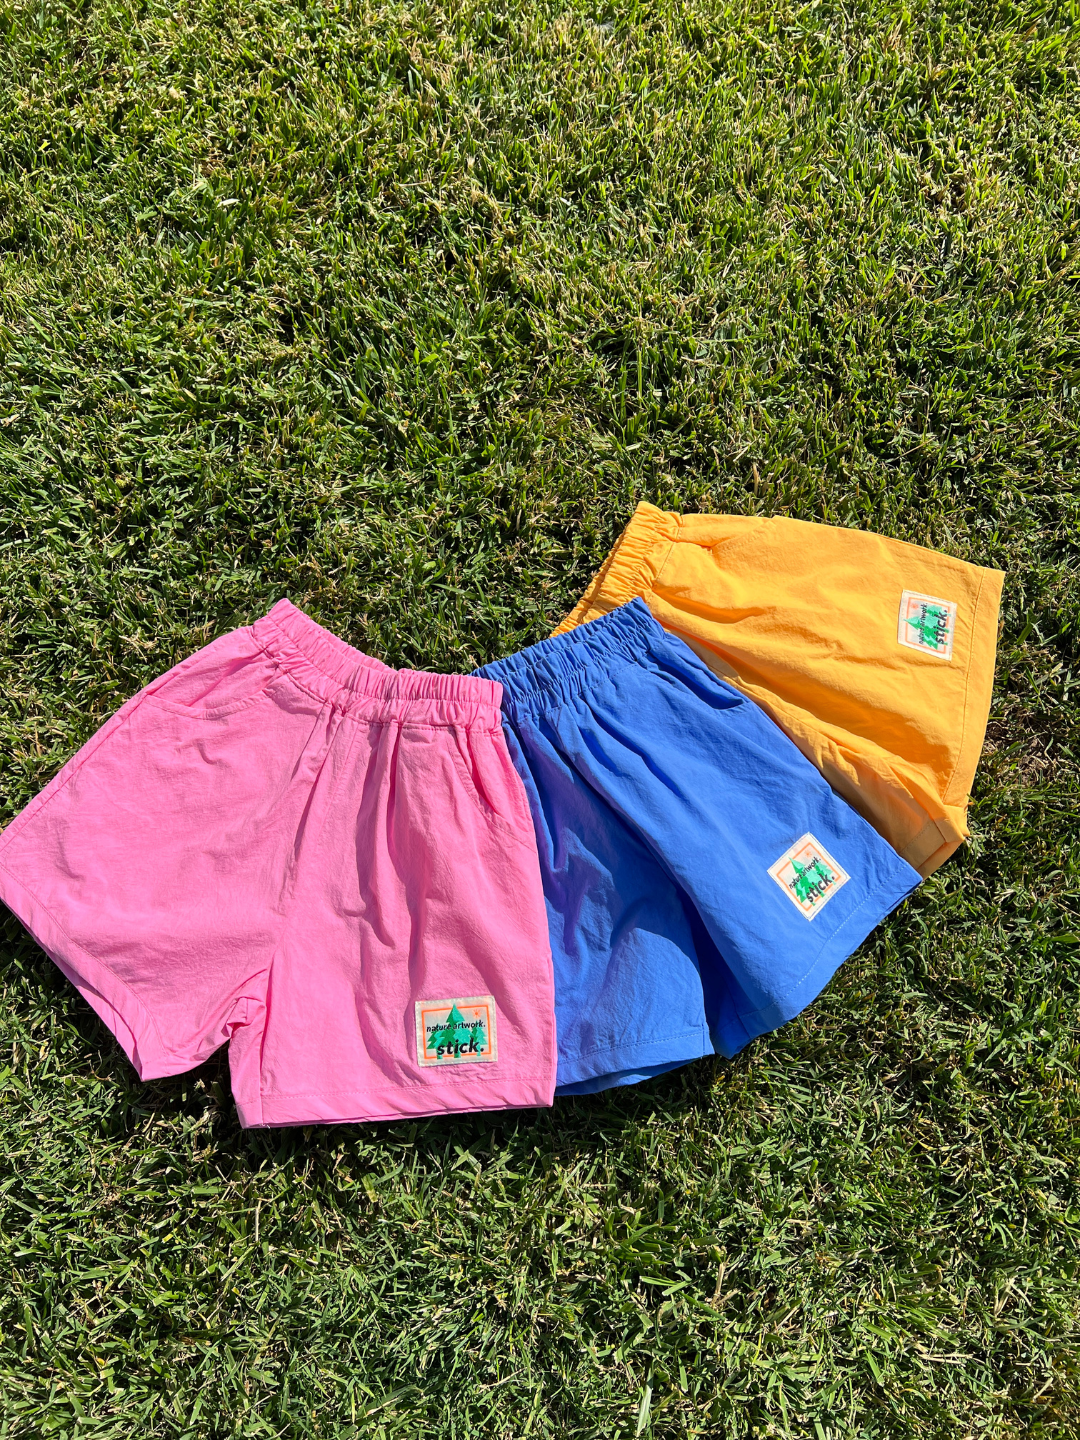 Pink, blue and orange kids' shorts arranged on grass.